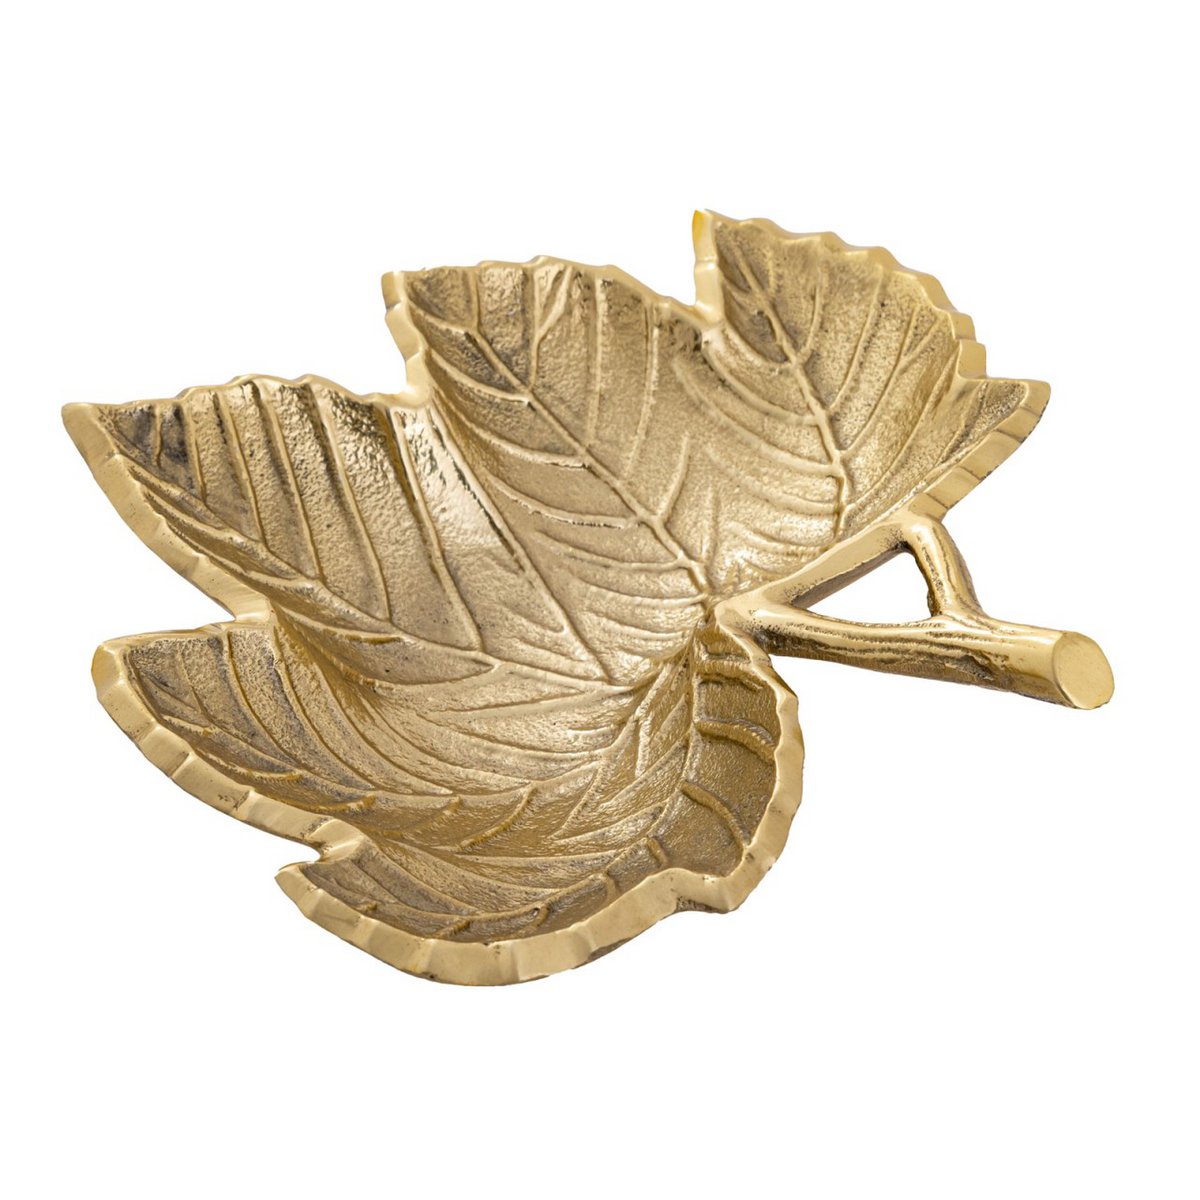 Dekoschale Blatt Masterbox 18-teilig Schale Aluminium Leaf gold o. silber Blattschale variant: silber